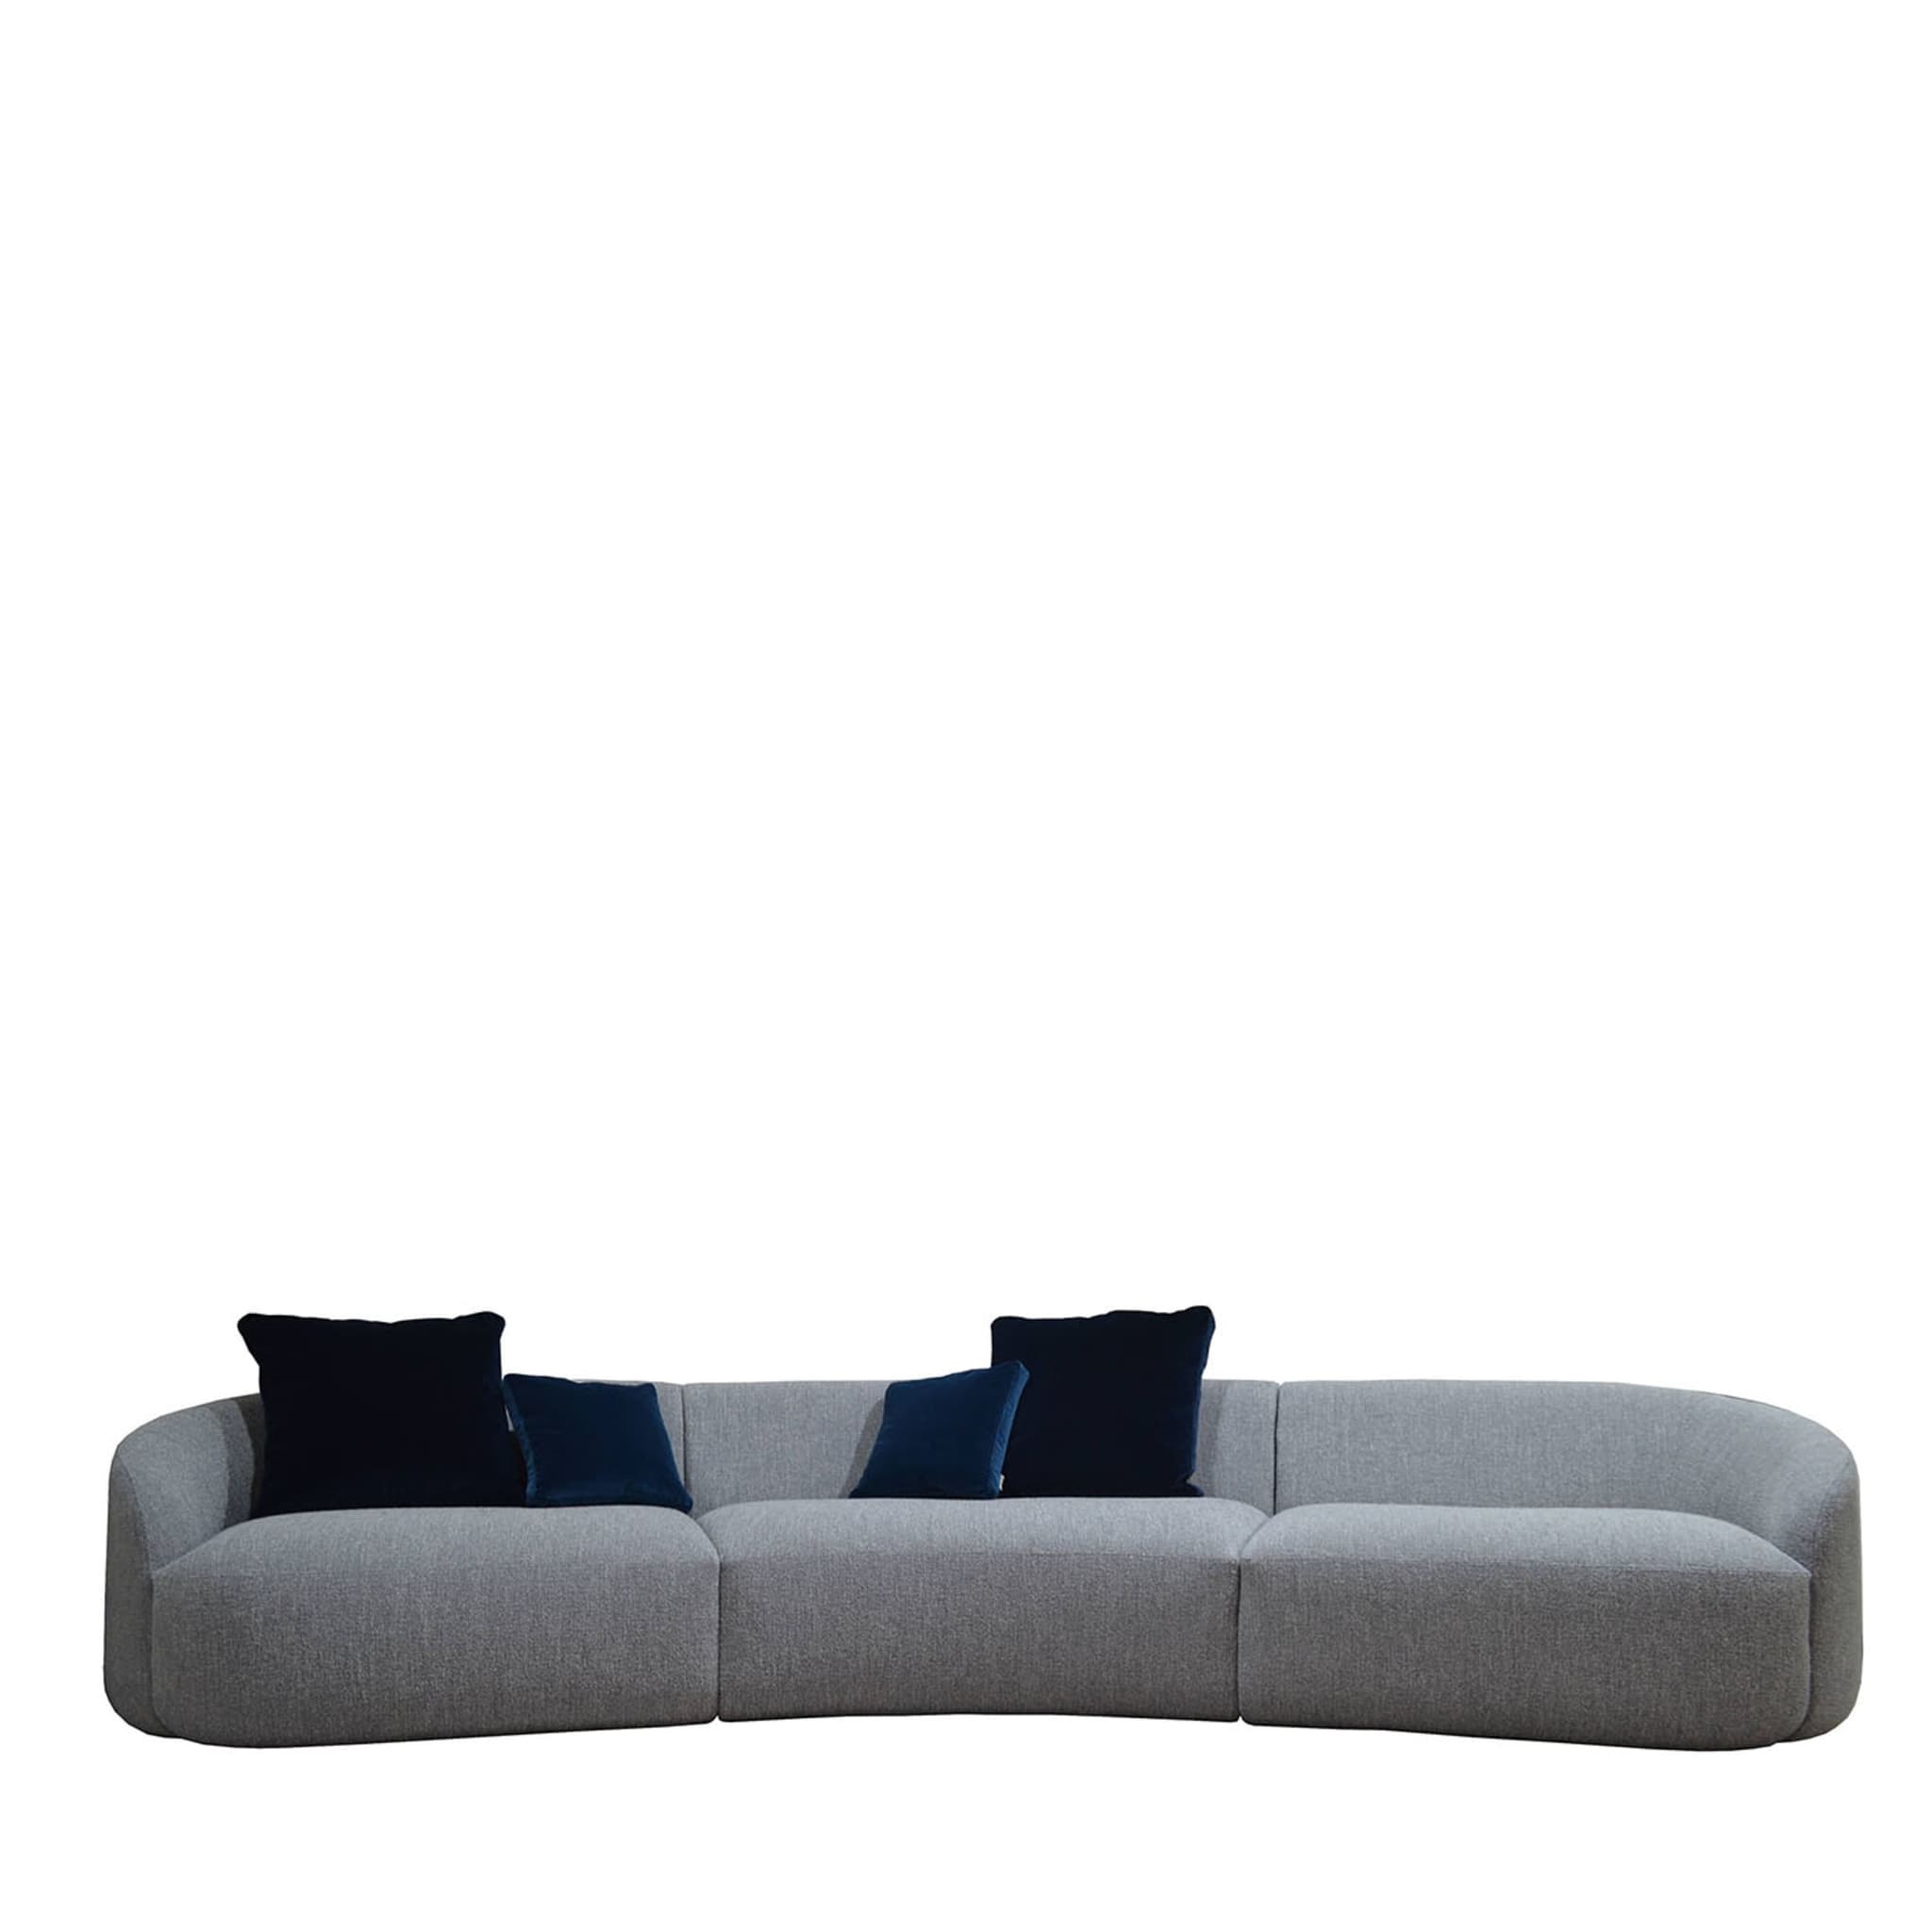 Cottonflower Modular Sofa in Torri Lana Grey Boucle - Main view